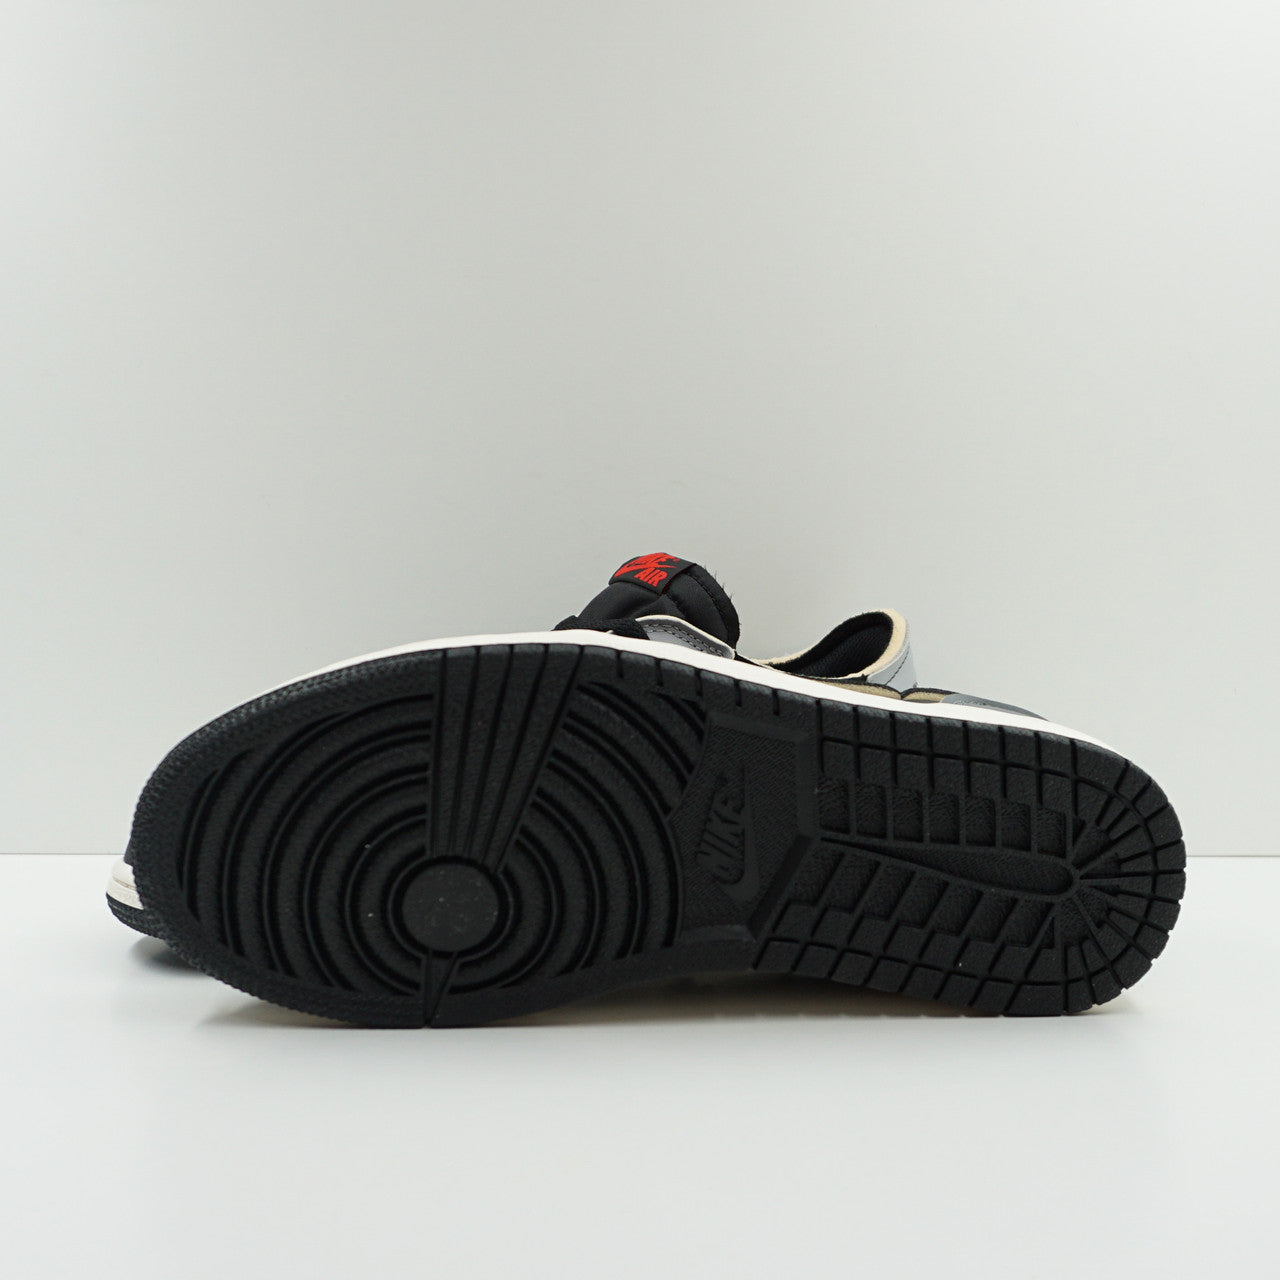 Where To Buy The Air Jordan 1 Low OG EX Black Smoke Grey - Sneaker